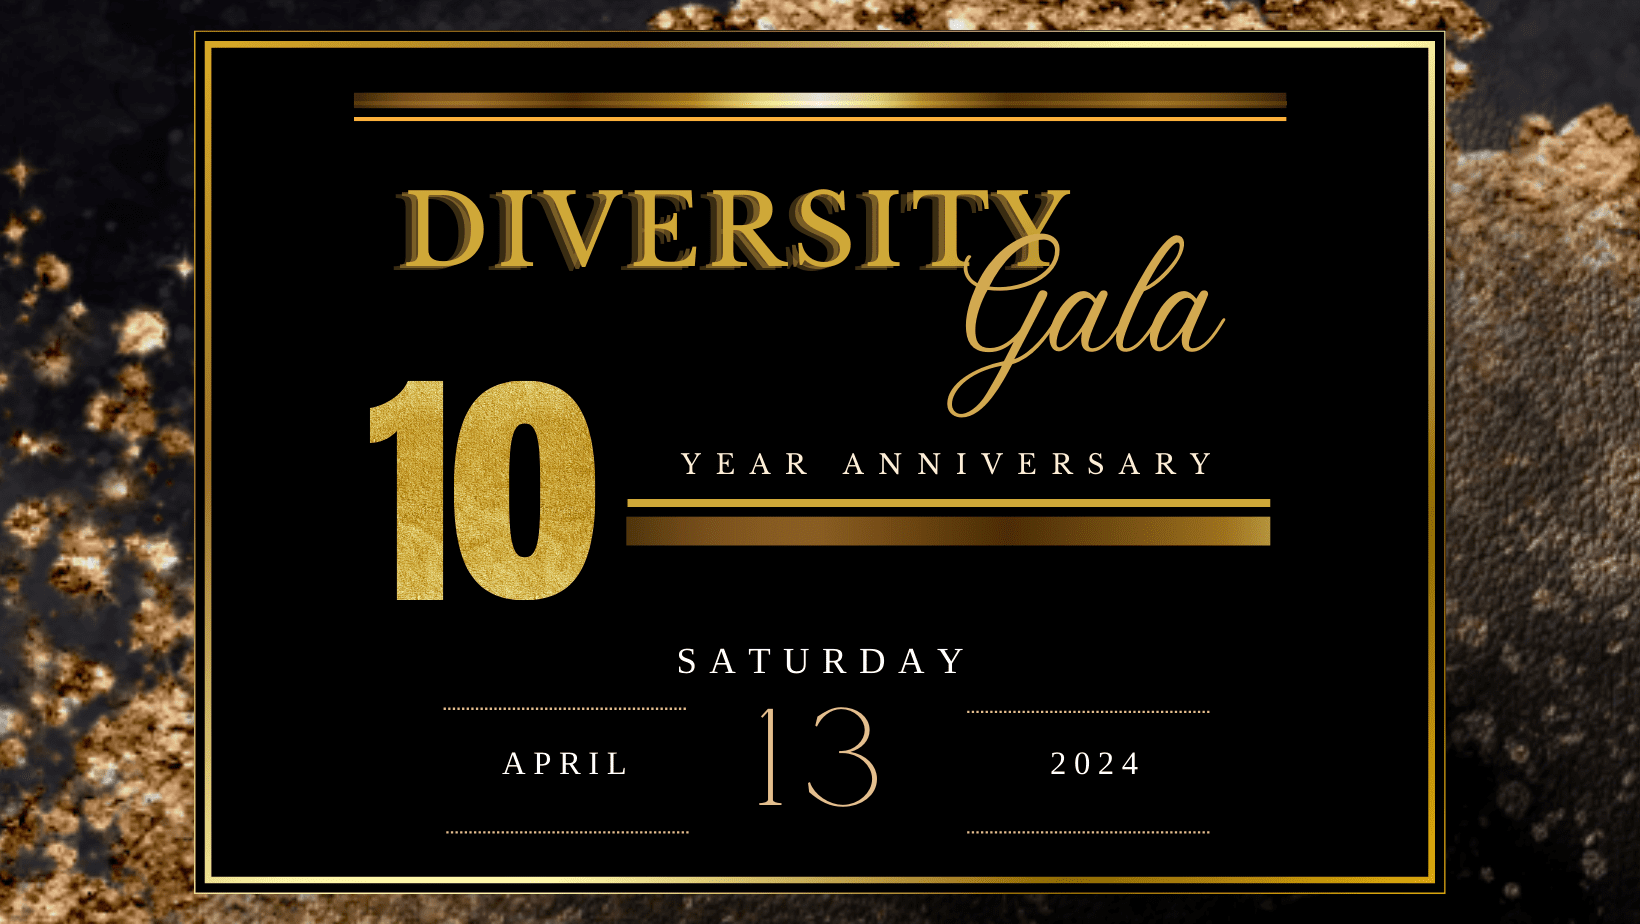 Elegant invitation for a 10th-year anniversary diversity gala event on saturday, april 13, 2024.